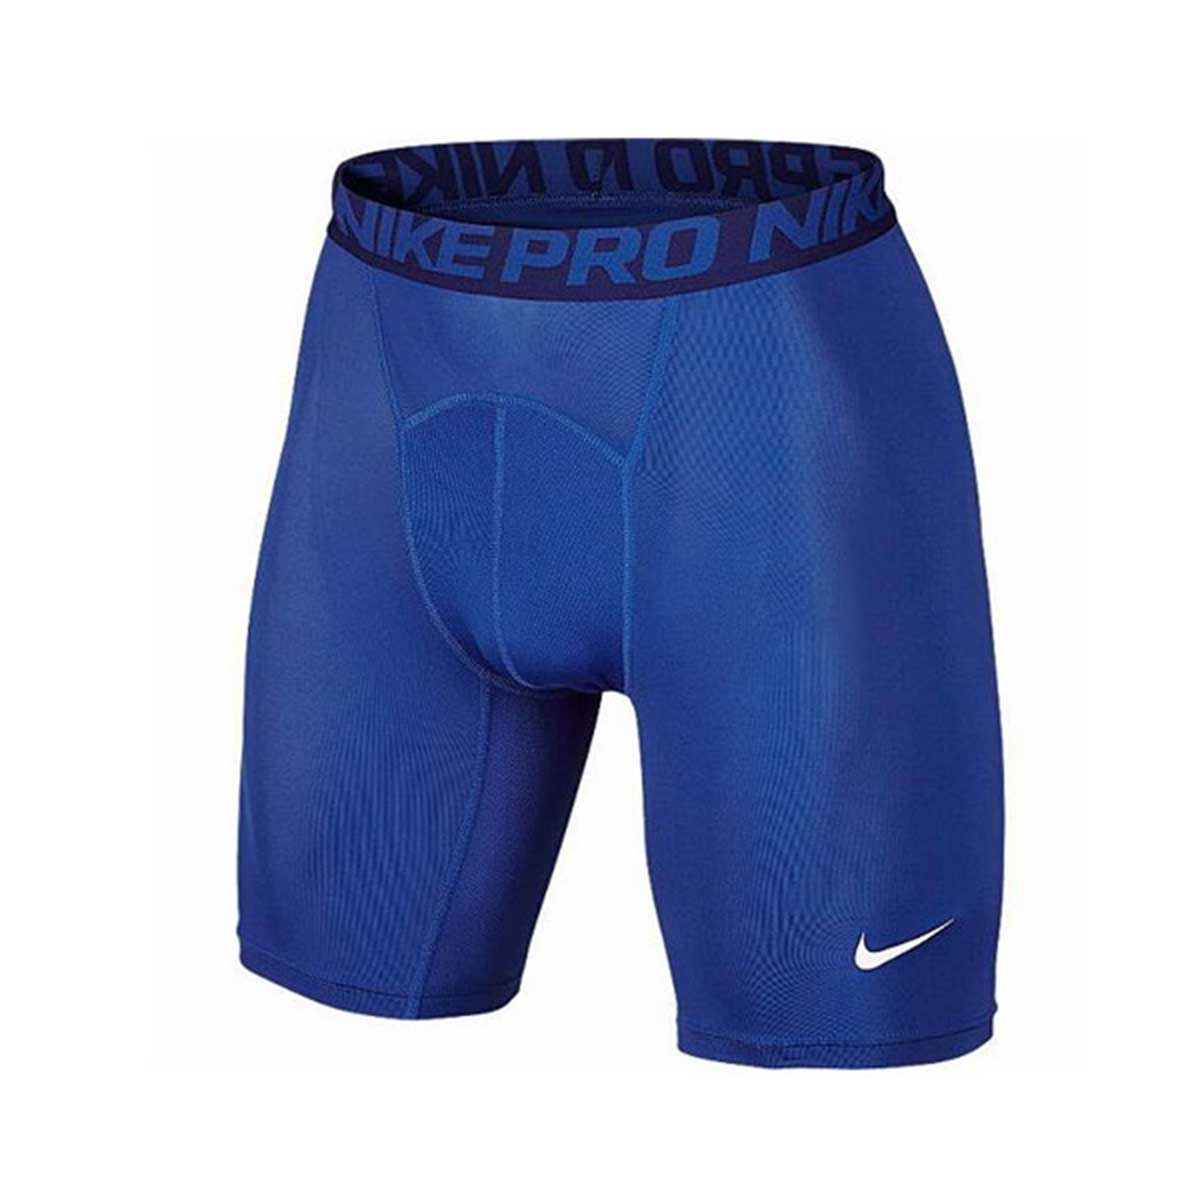 nike compression shorts blue